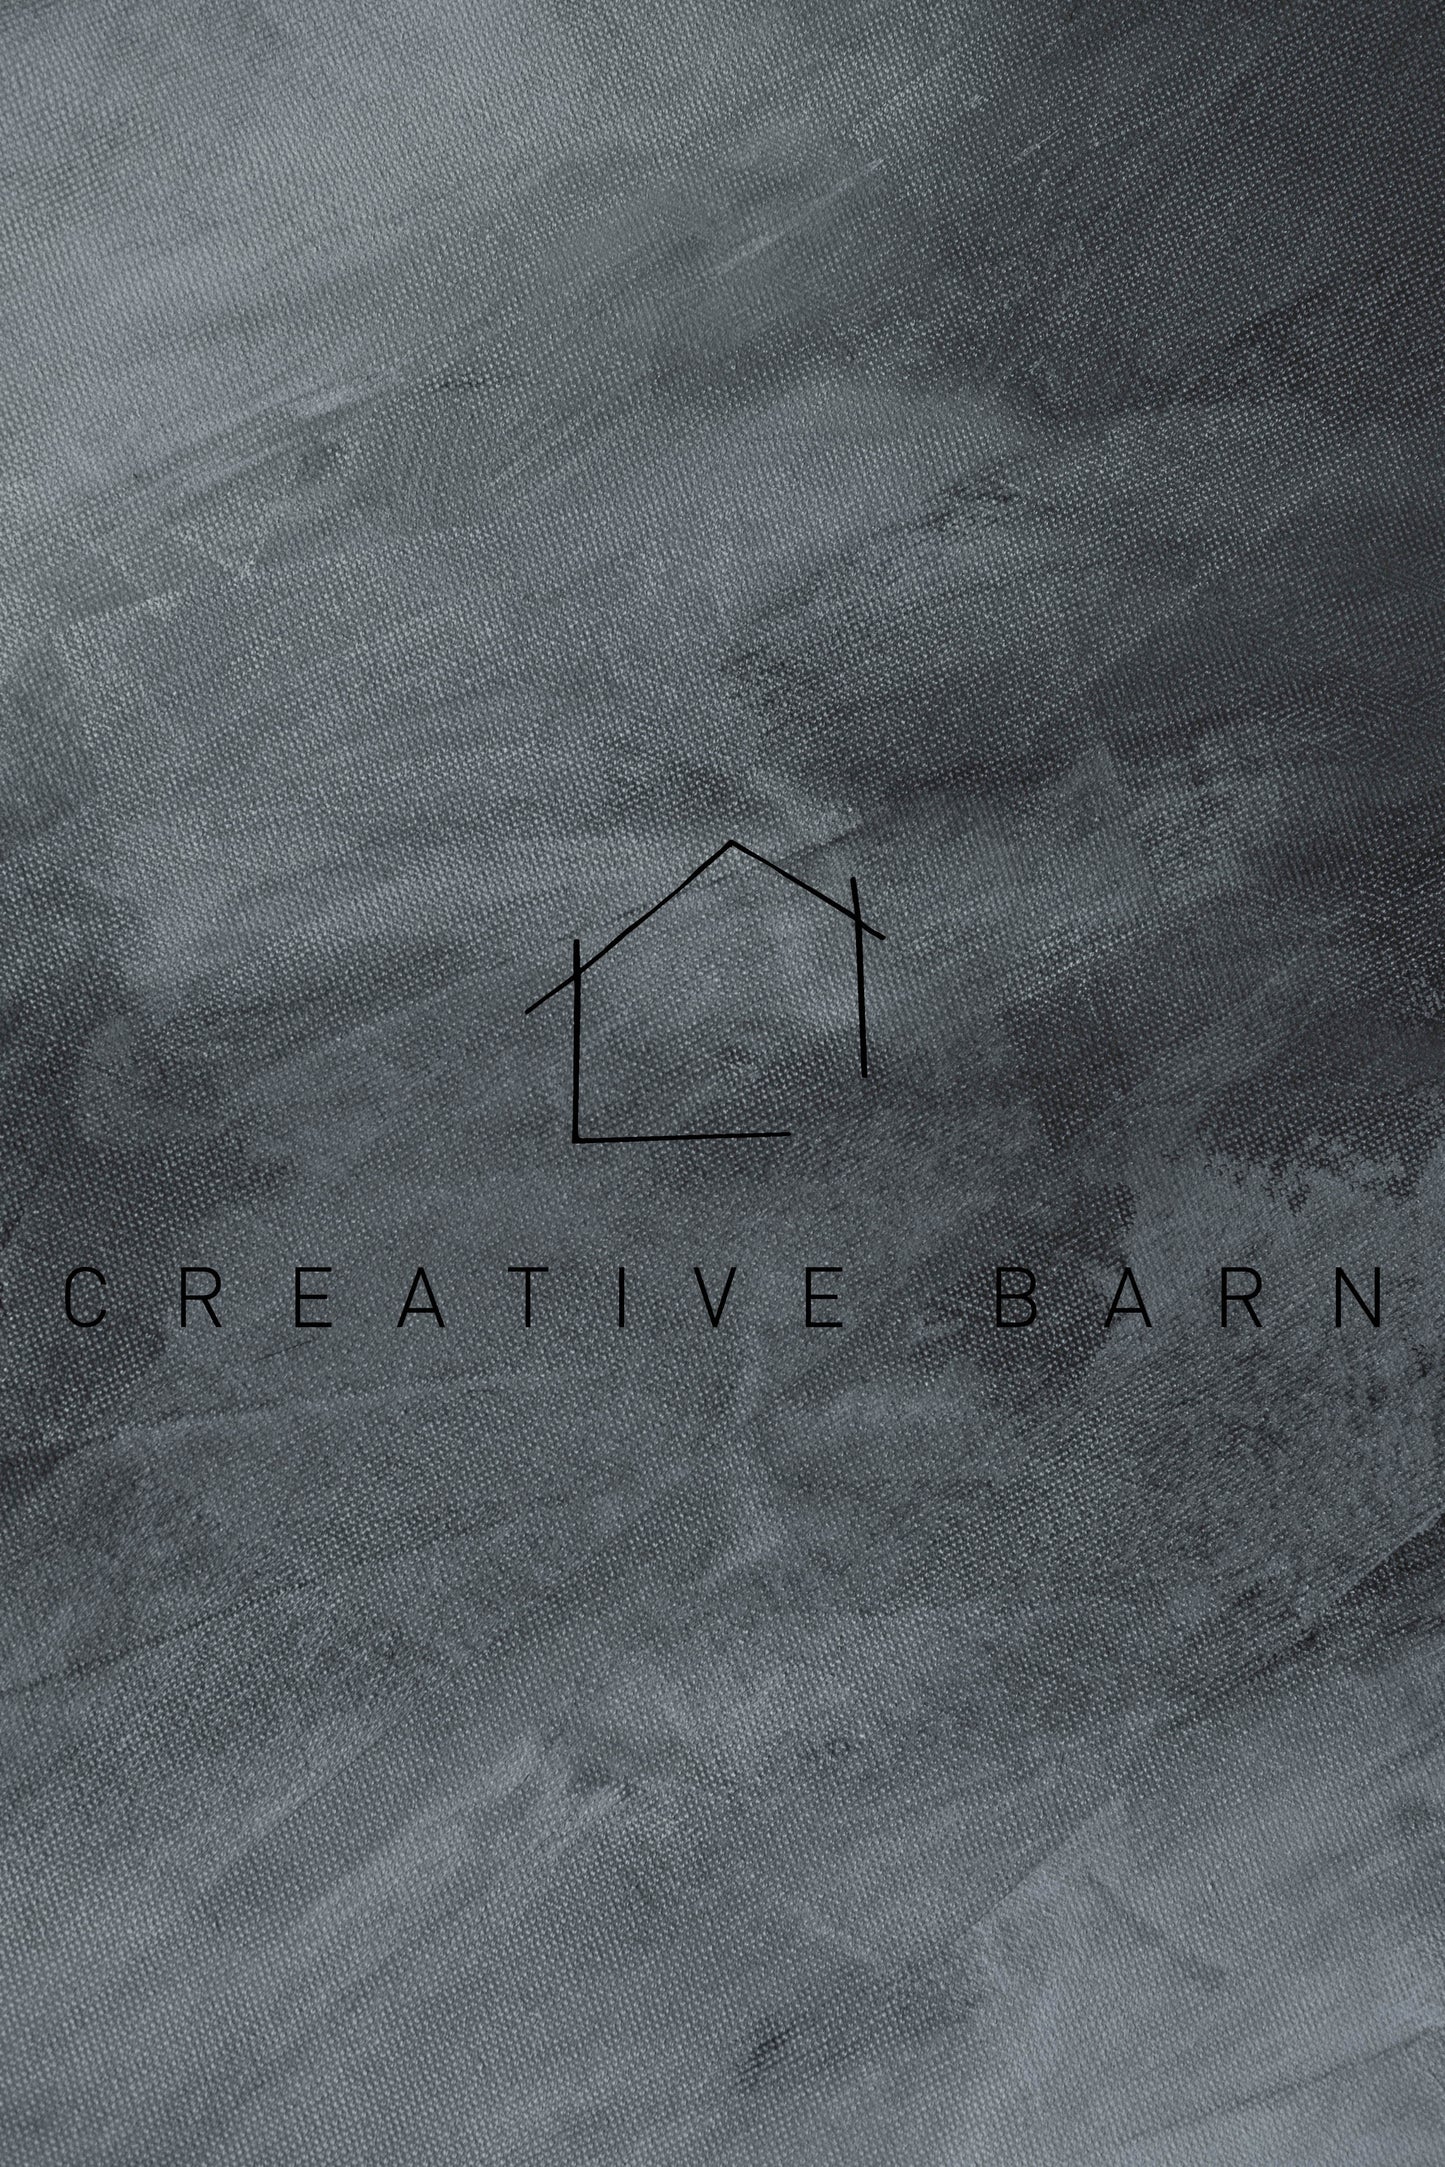 'Charcoal' - CreativeBarn